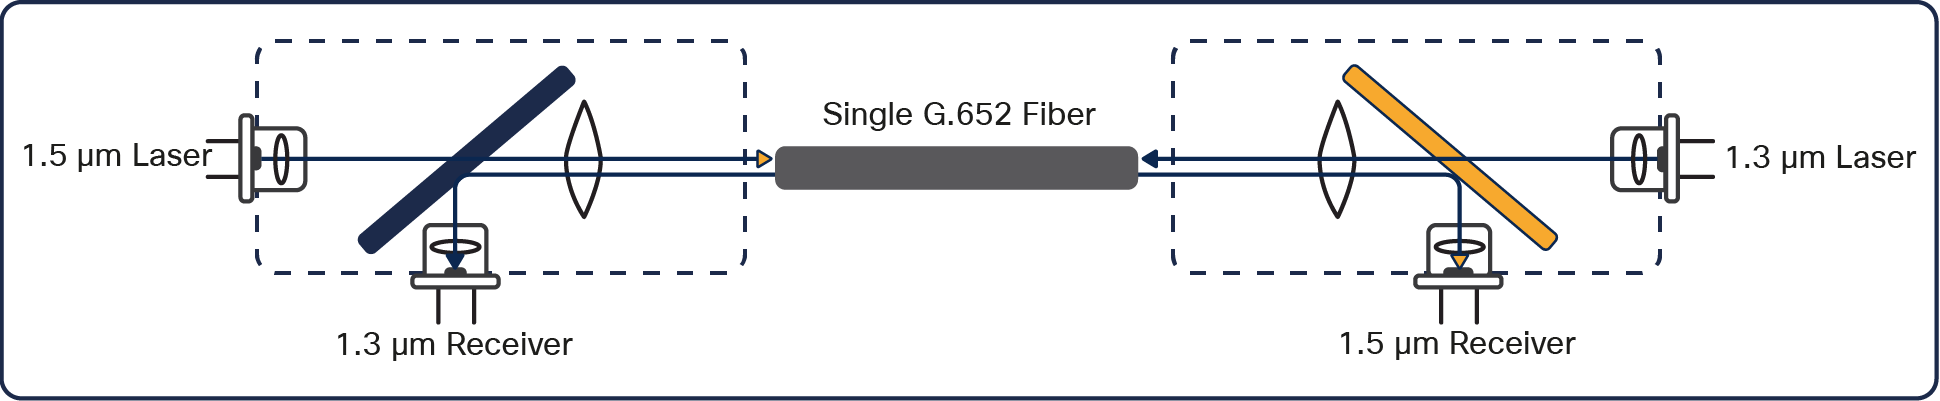 Gigabit SFP LX/LH Transceiver GBIC #GLC 